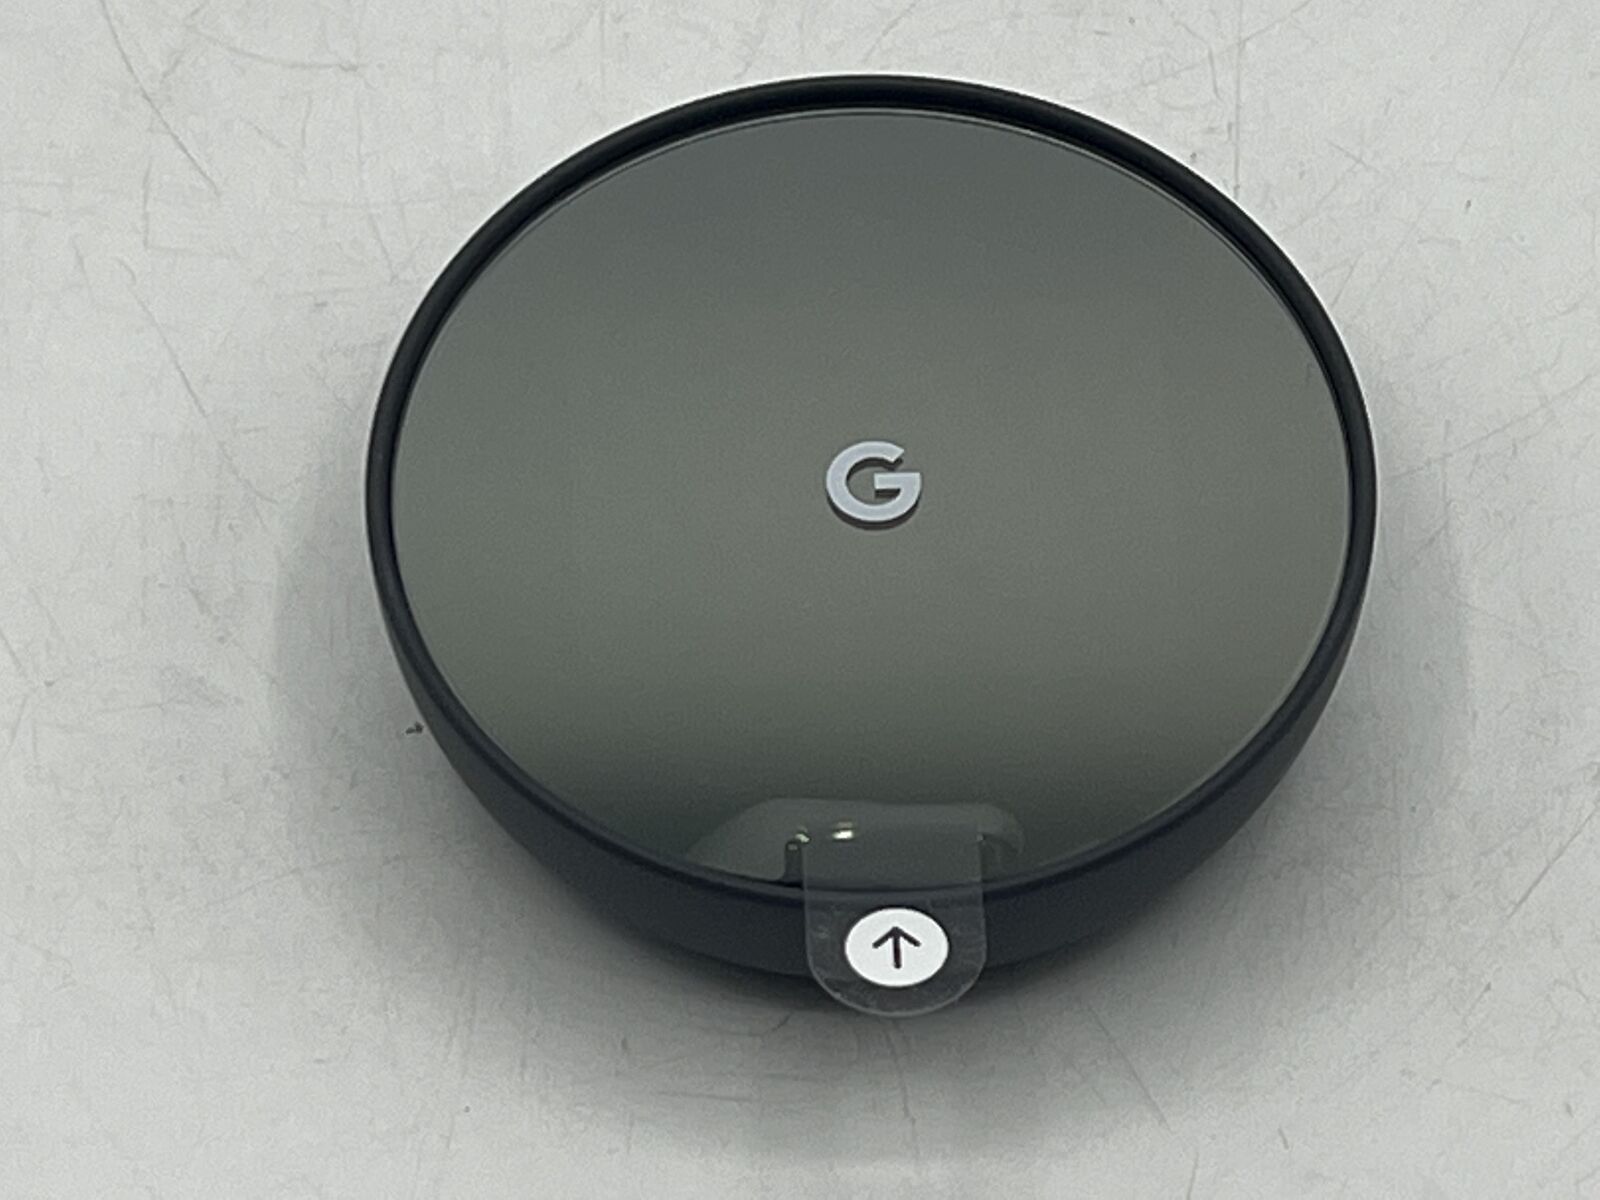 Google Nest G4CVZ GA02081-US Programmable Smart Thermostat Charcoal New Open Box